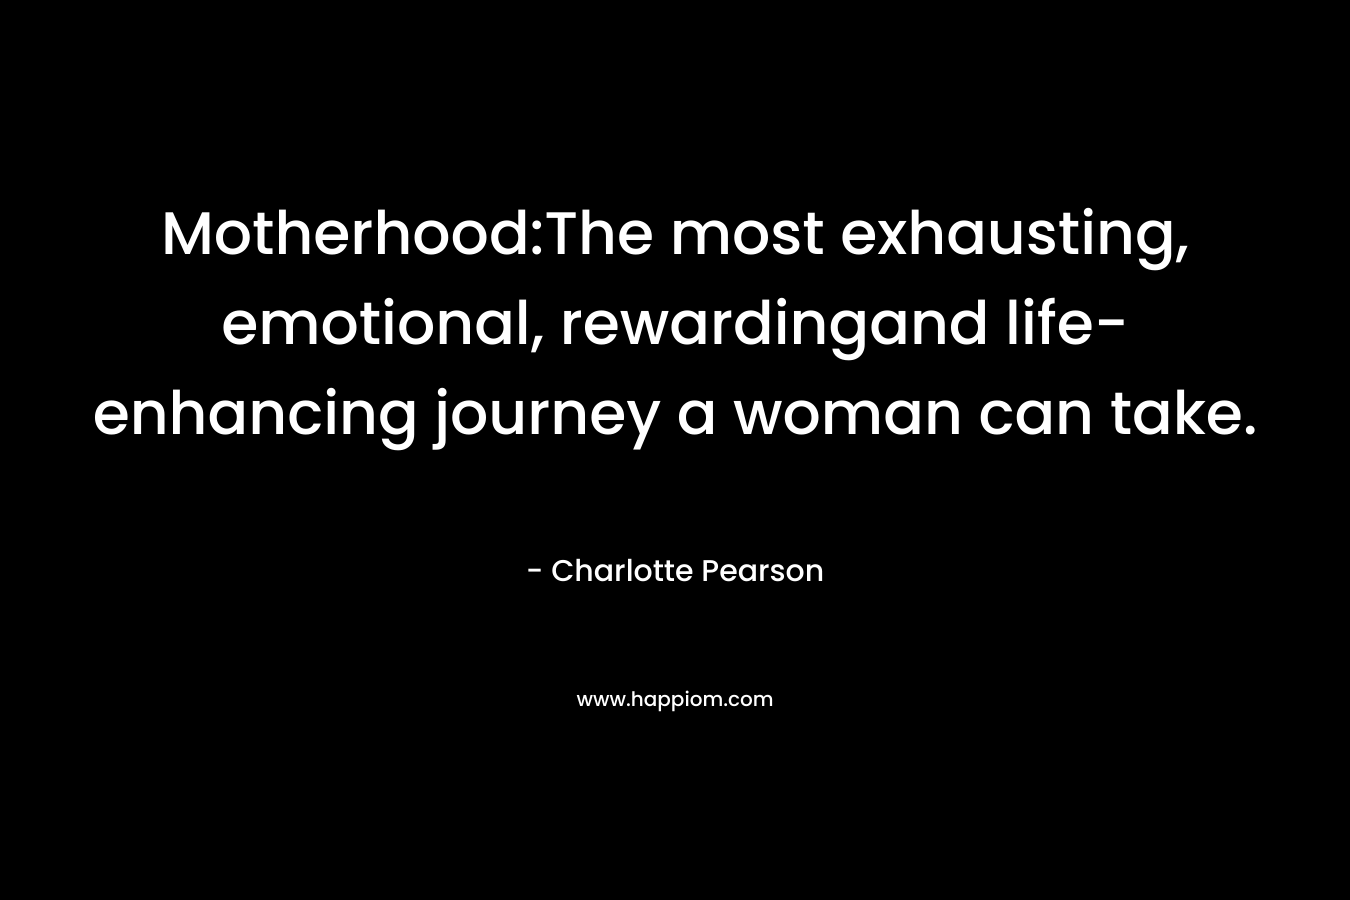 Motherhood:The most exhausting, emotional, rewardingand life-enhancing journey a woman can take.